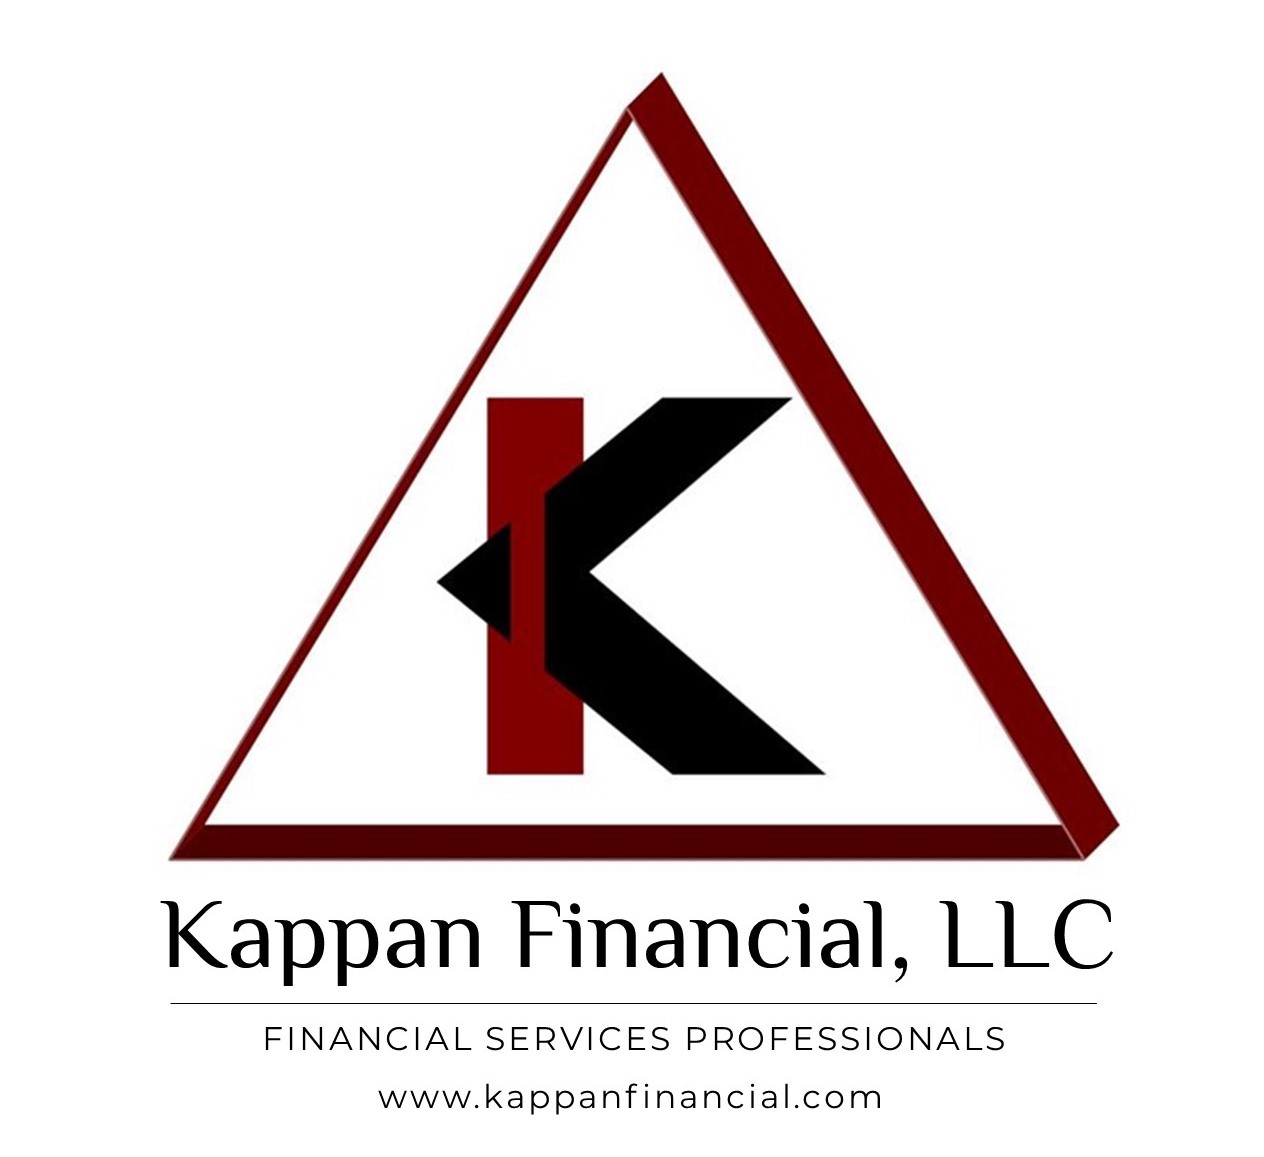 Kappan Financial LLC